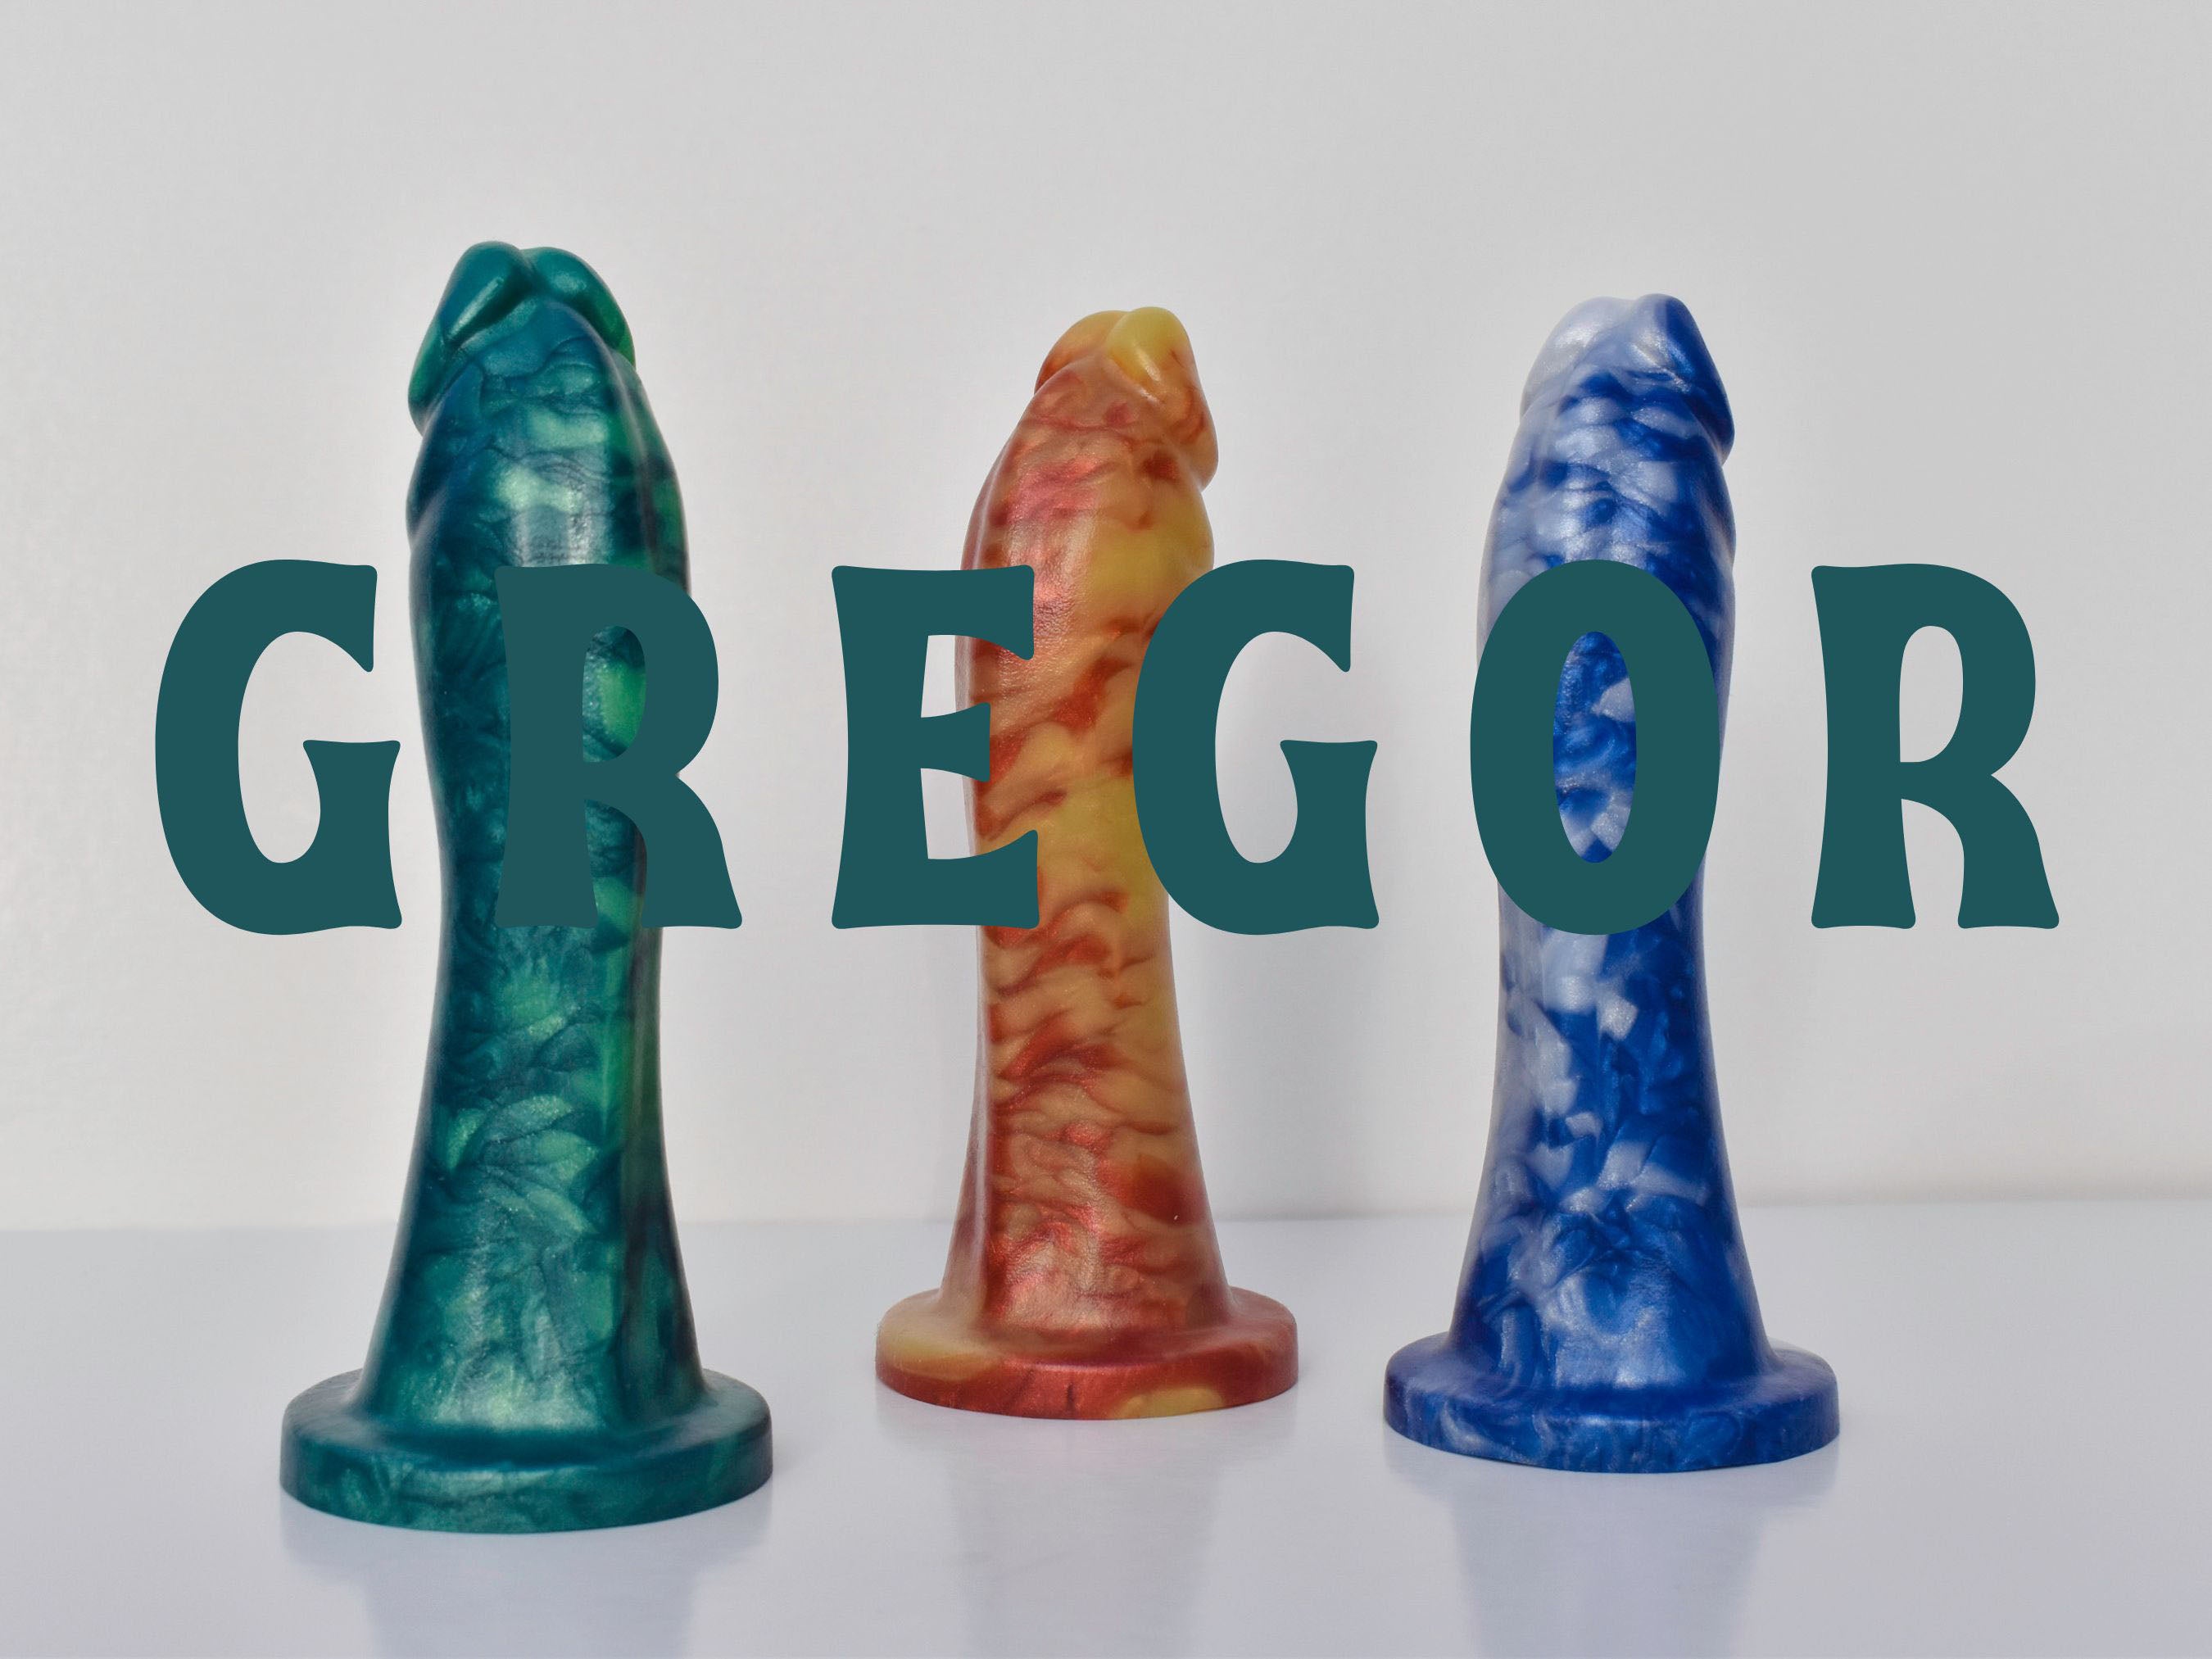 Gregor Realistic Dildo - Marbles